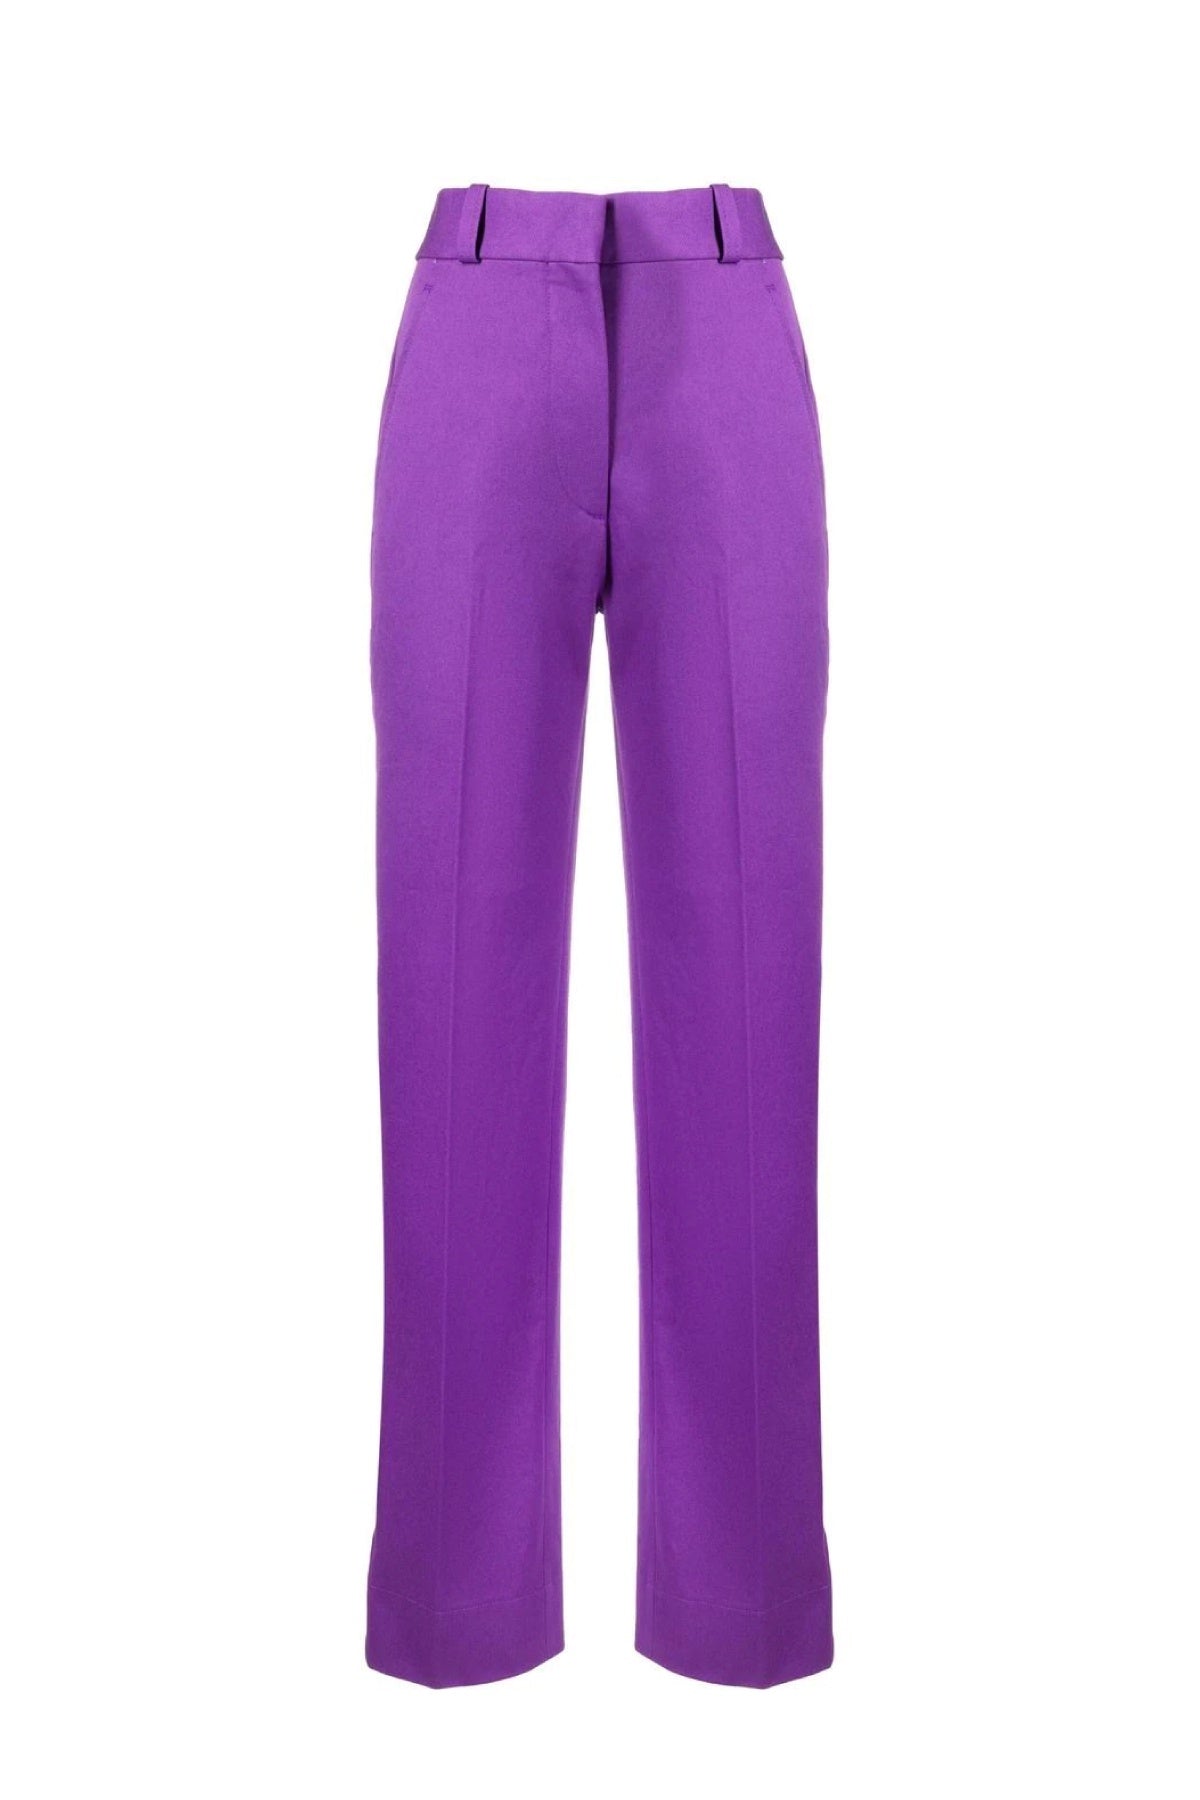 Victoria Beckham Carpenter Trouser - Bright Purple